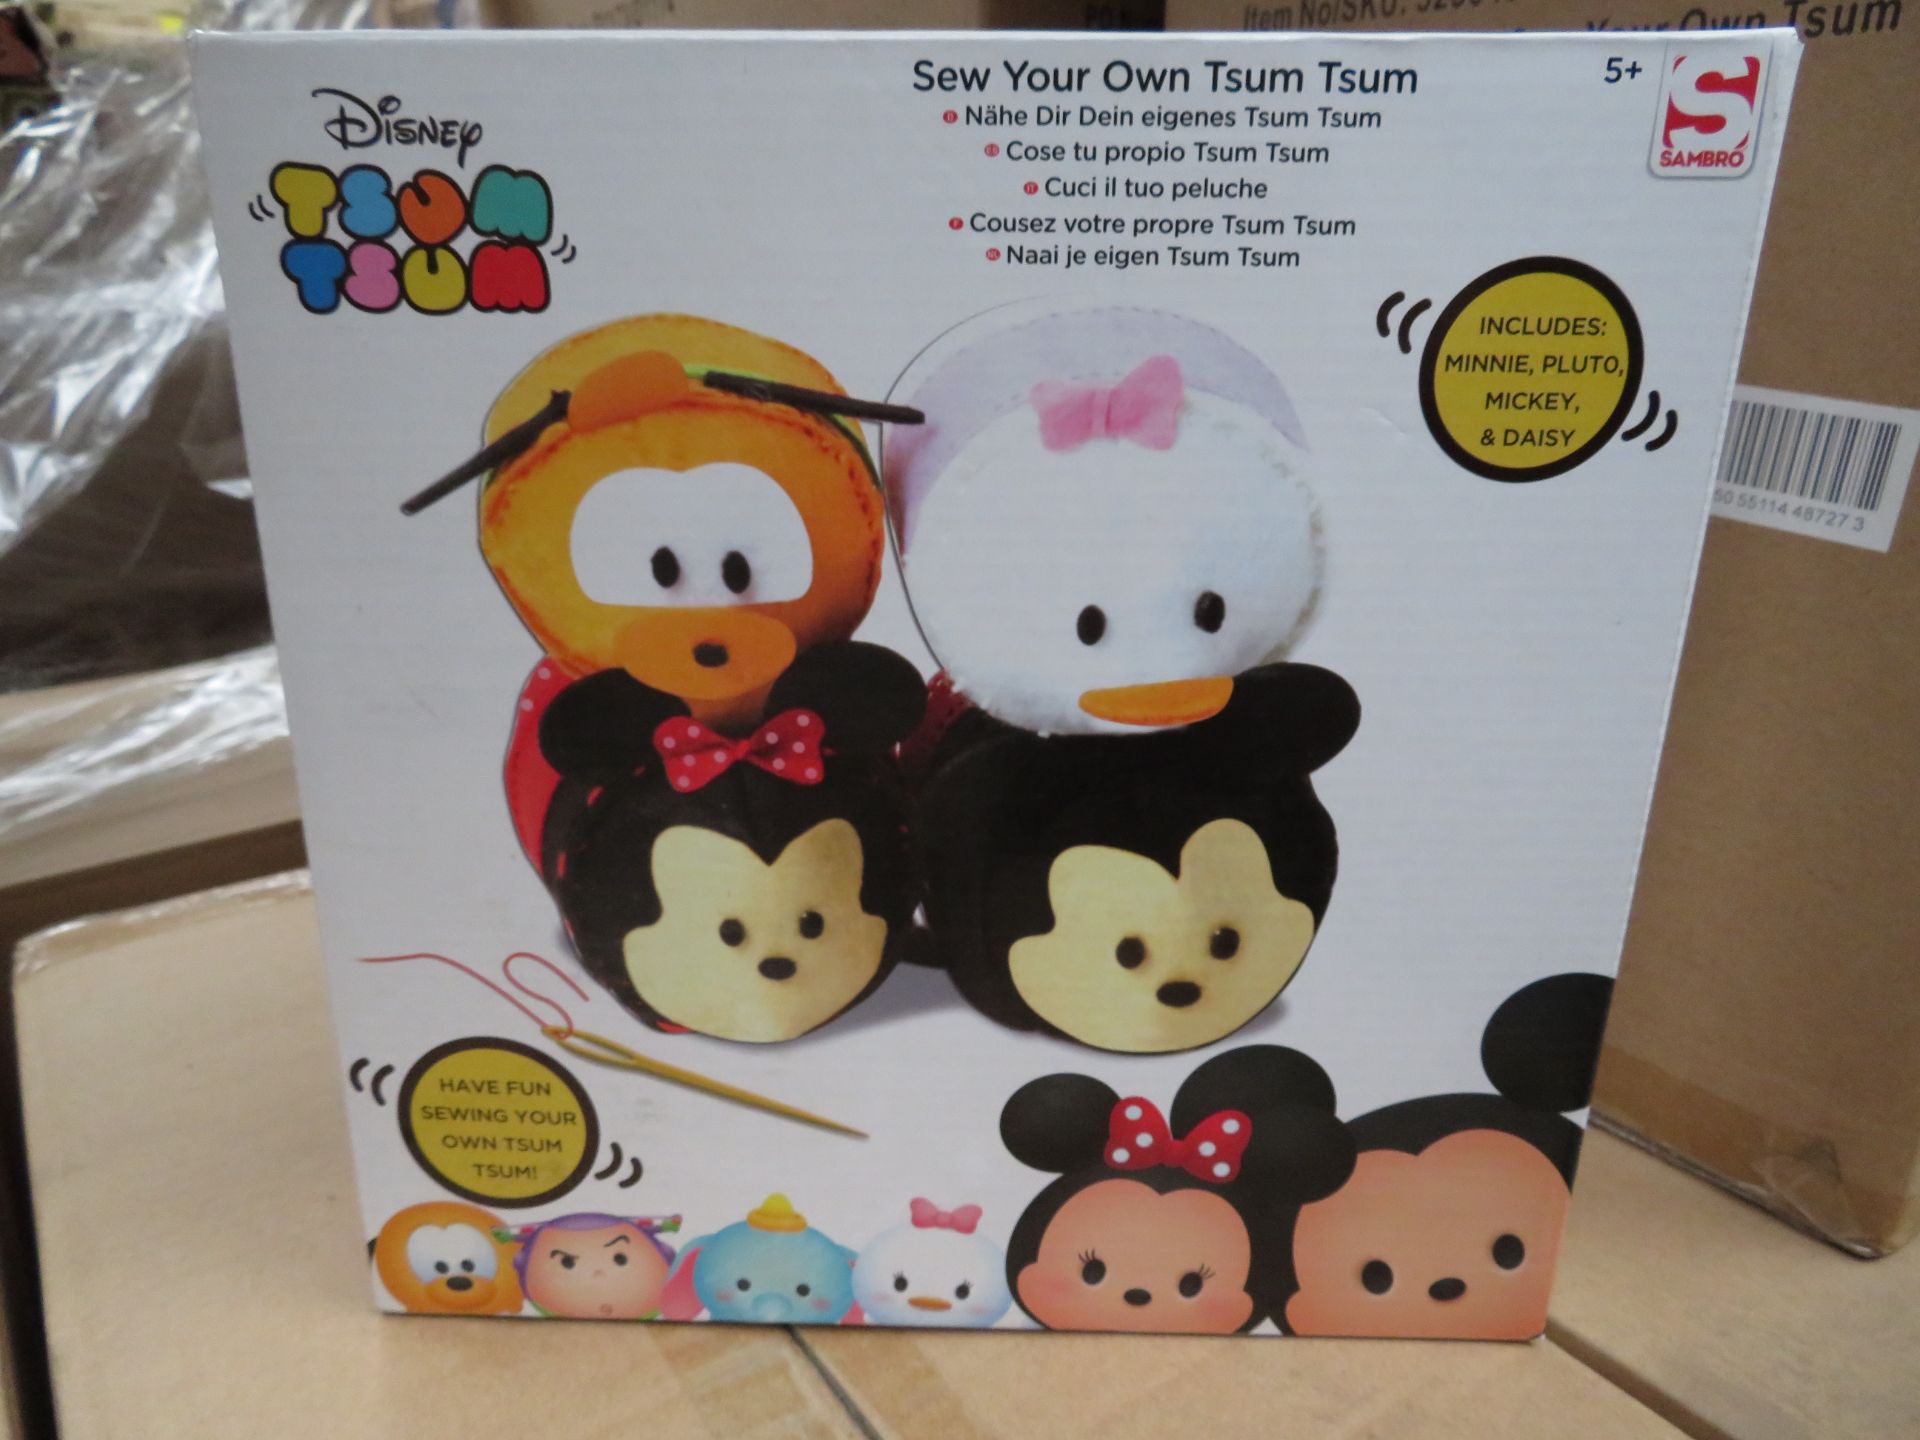 36 x Brand New - Disney Tsum Tsum Sew Your Own Tsum Tsum. RRP £12.99 each